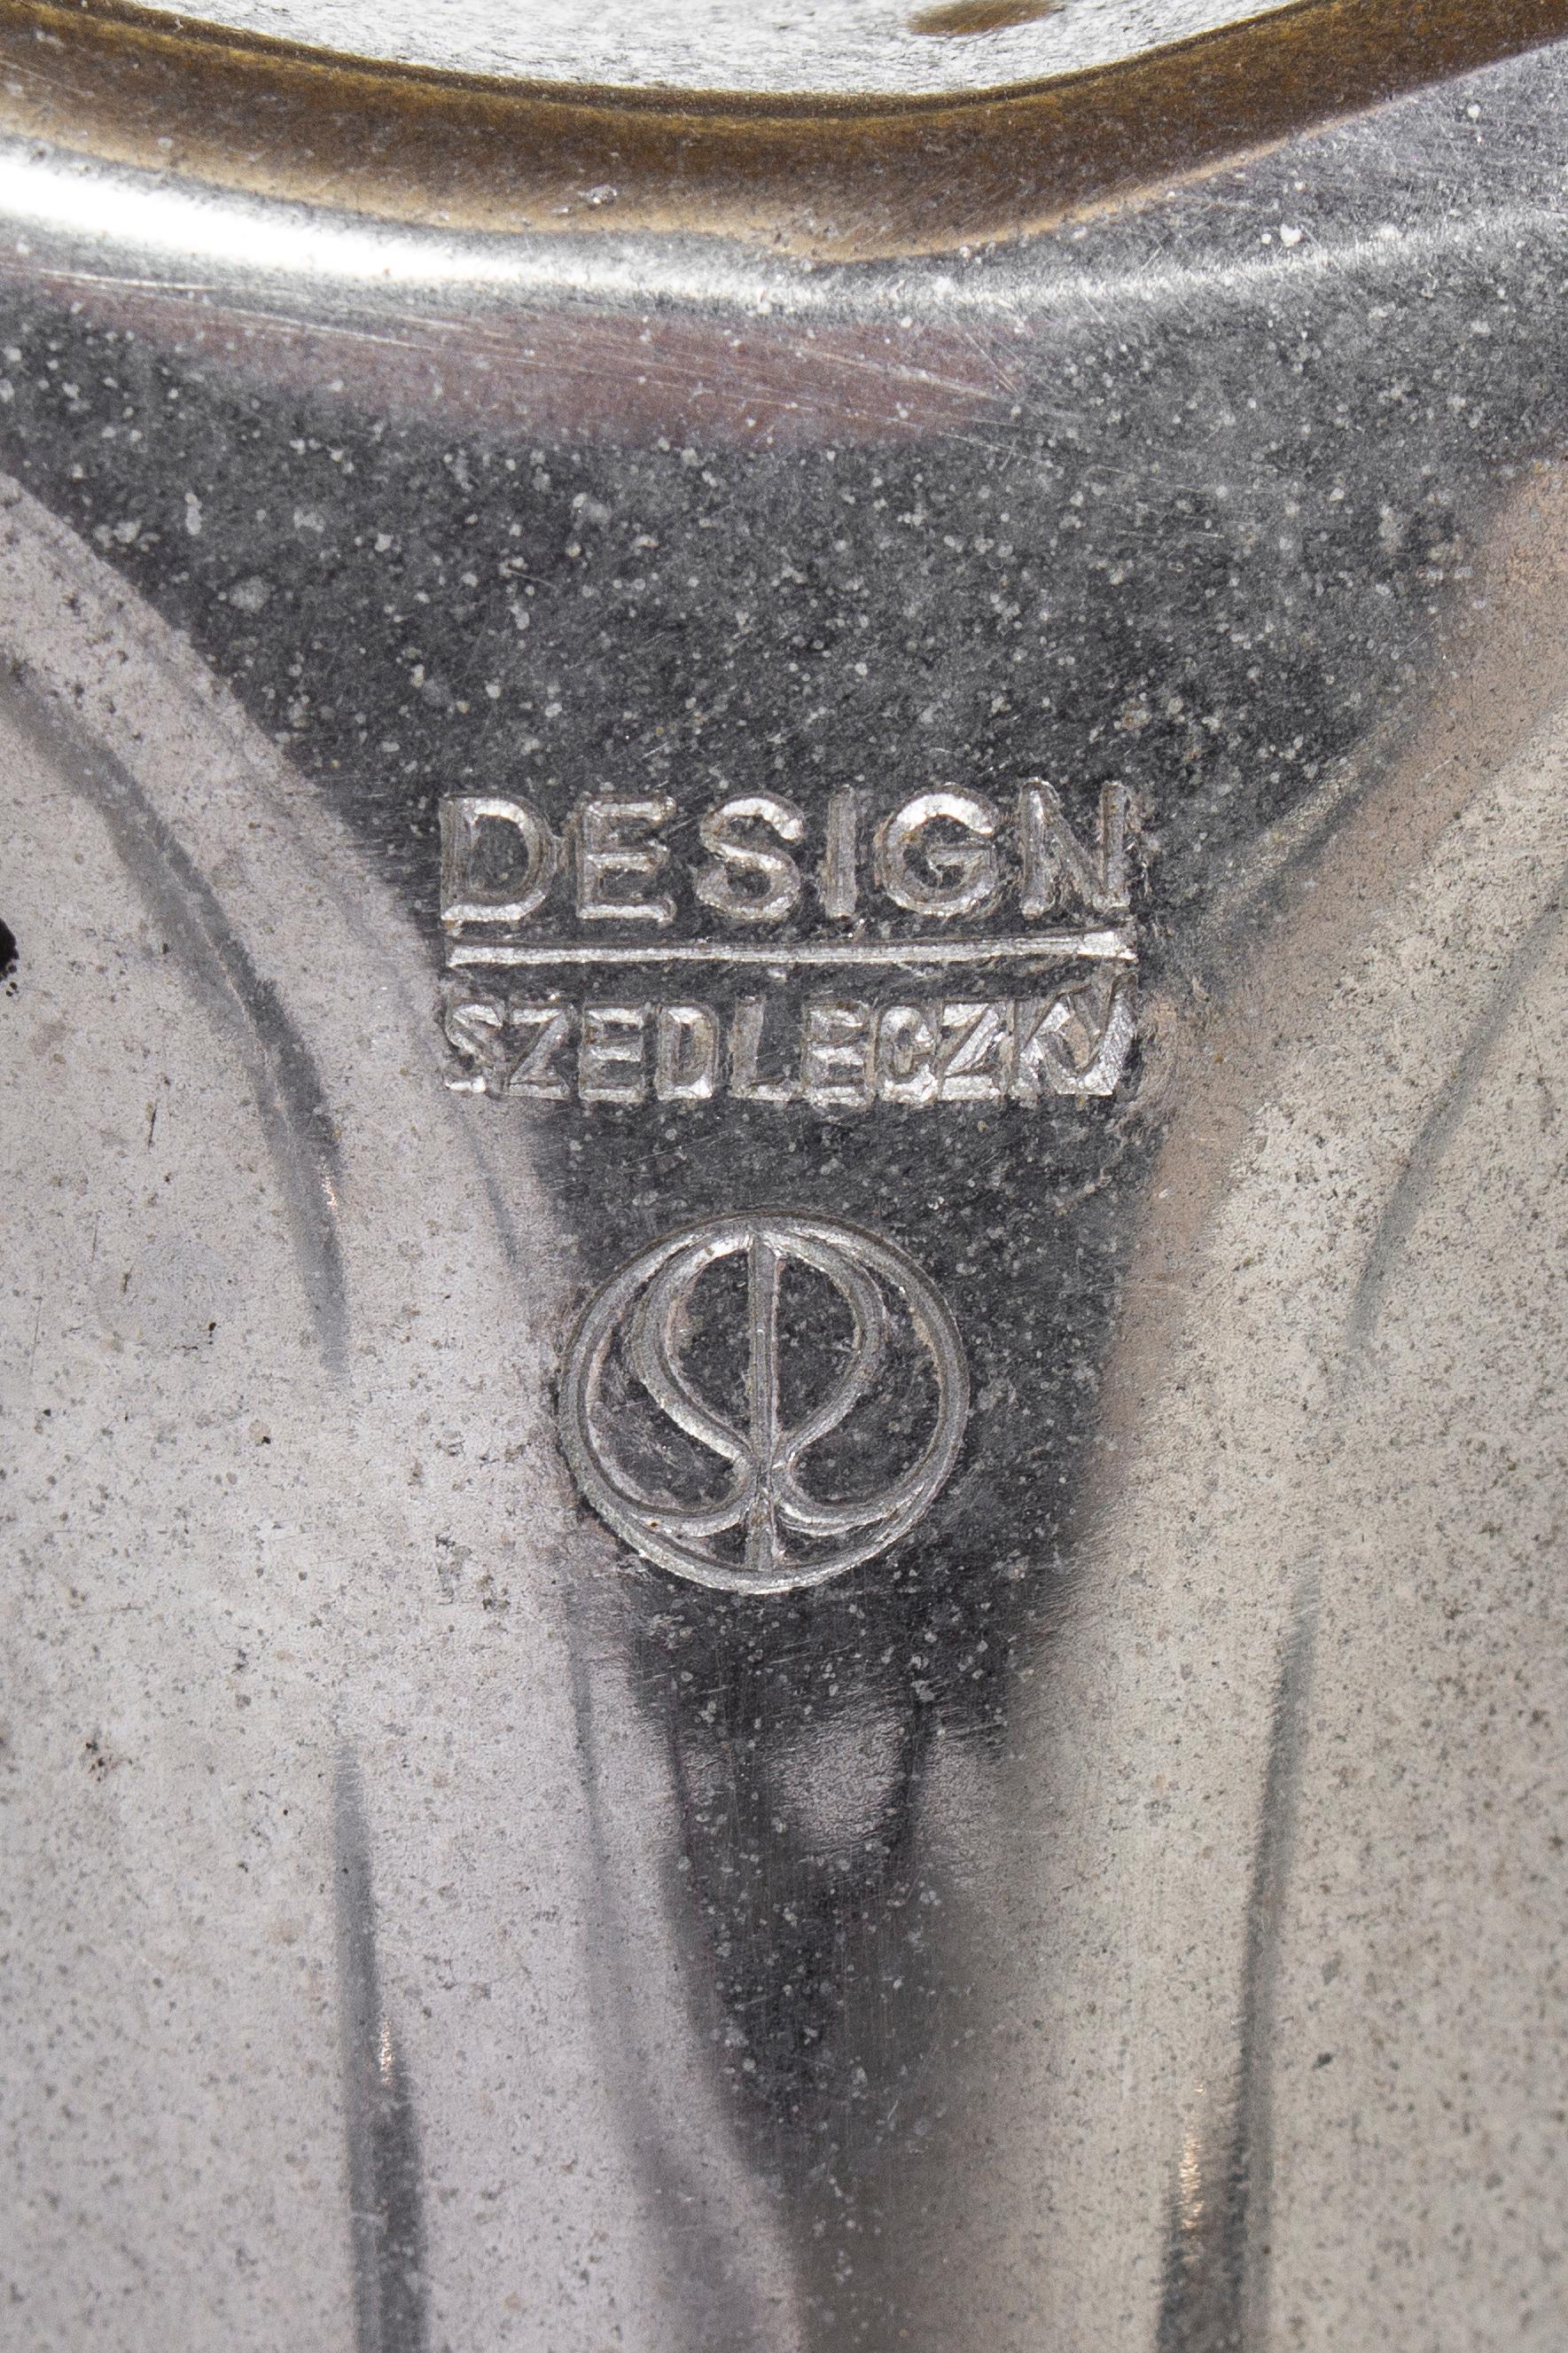 Late 20th Century Rudolf Szedleczky Design Swivel Chair in Yellow, ca. 1970s